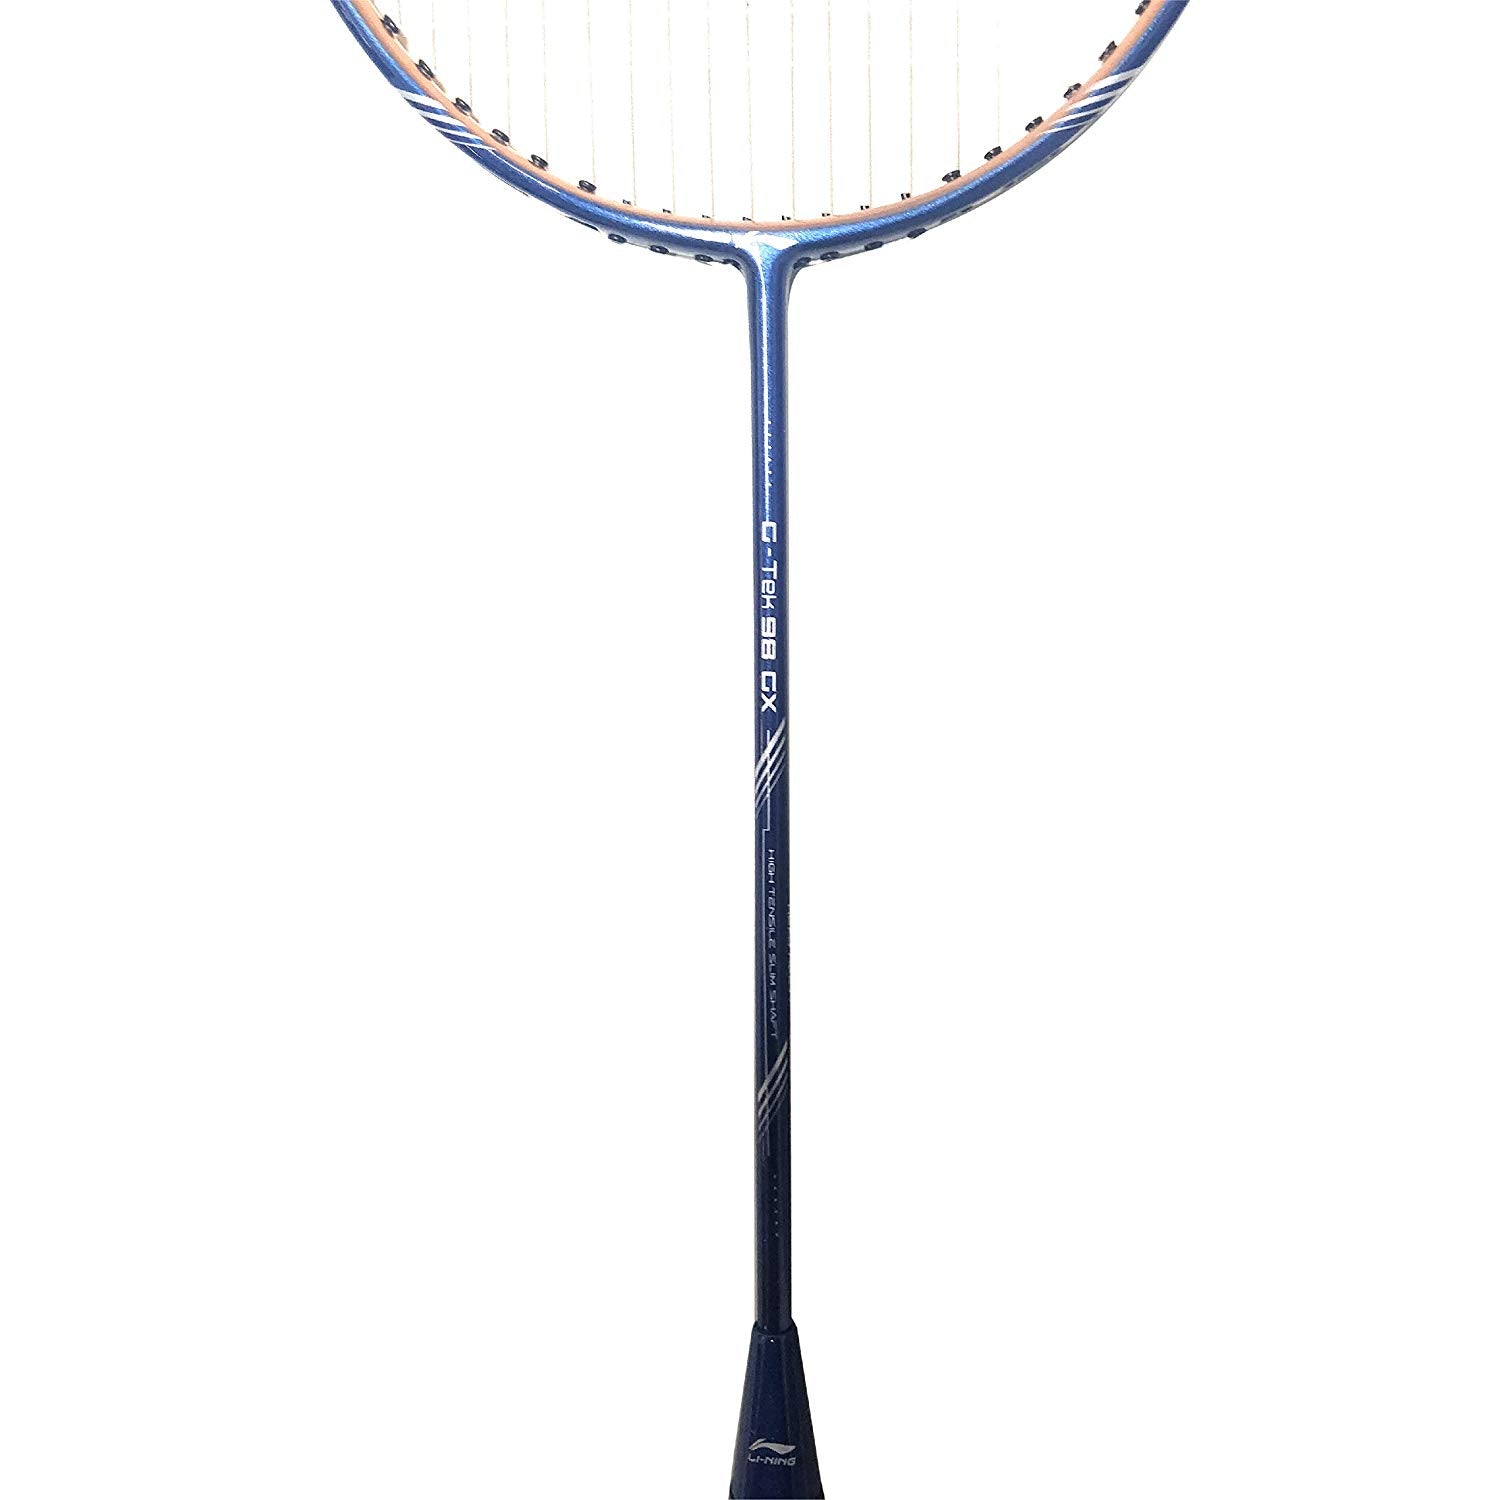 Li-Ning G-TEK 98 GX Graphite Strung Badminton Racquets (Navy/Gold) - Best Price online Prokicksports.com